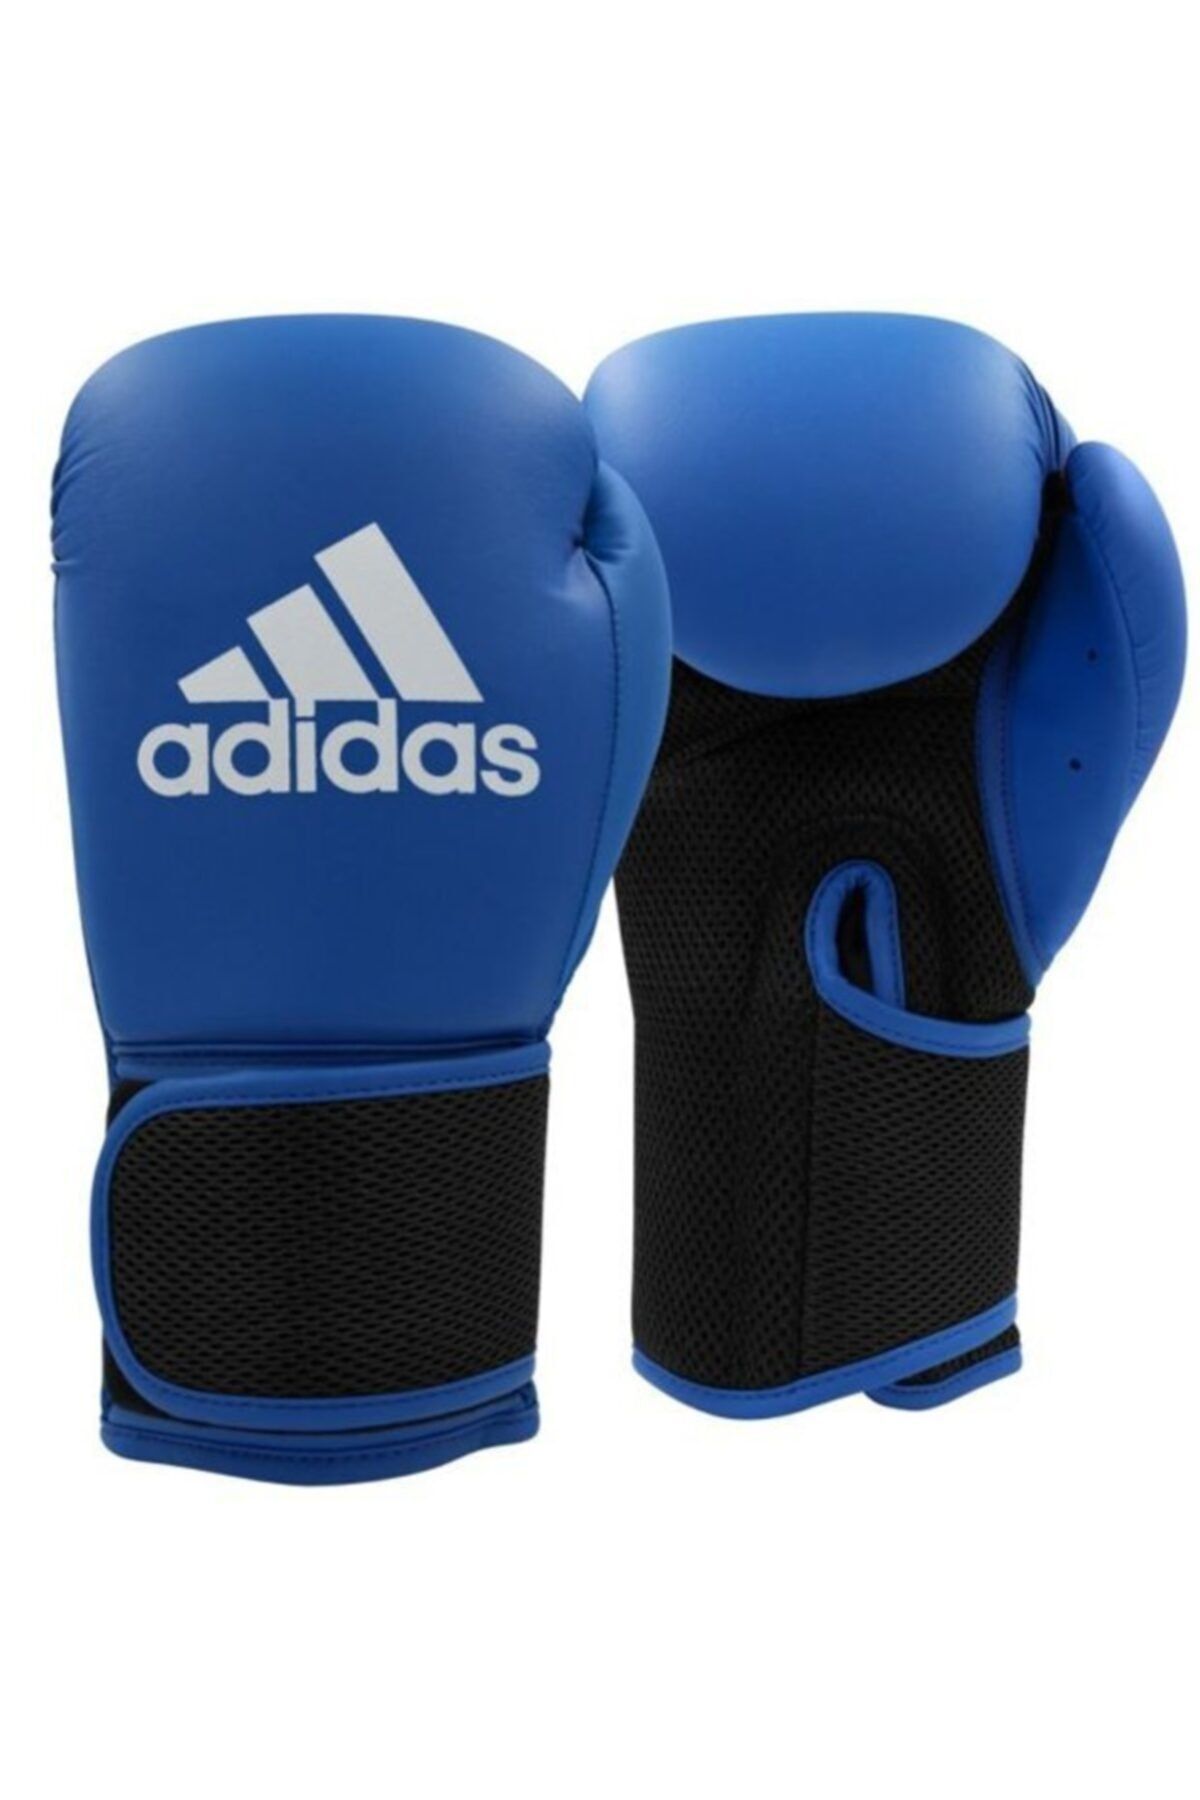 adidas Adıh25 Hybrid 25 Boks Eldiveni Boxing Gloves